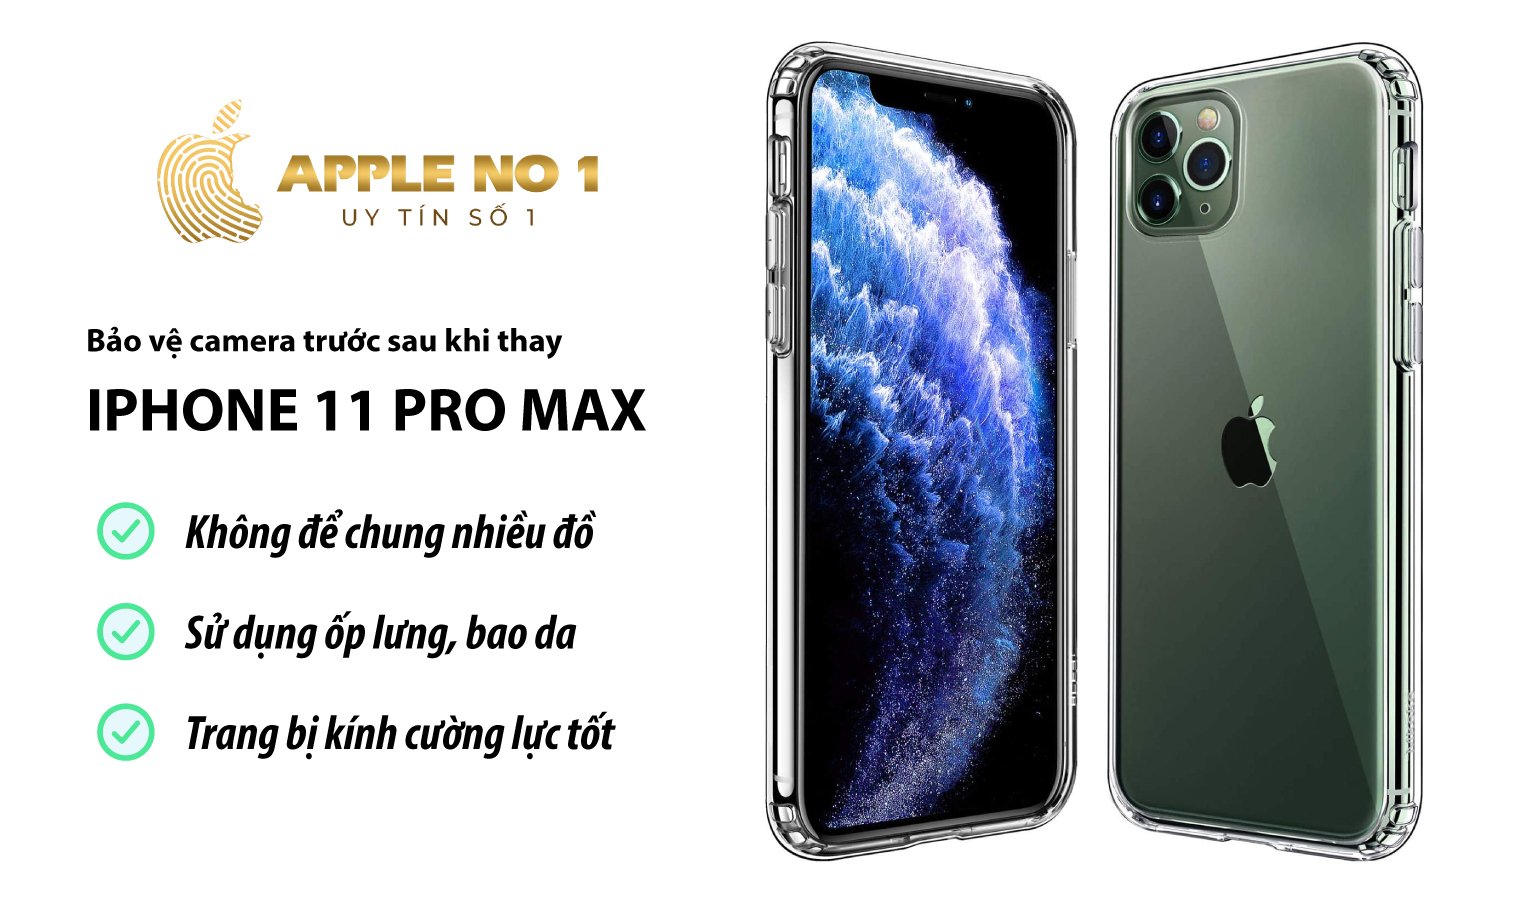 bao ve camera truoc iphone 11 pro max bang cach nao?